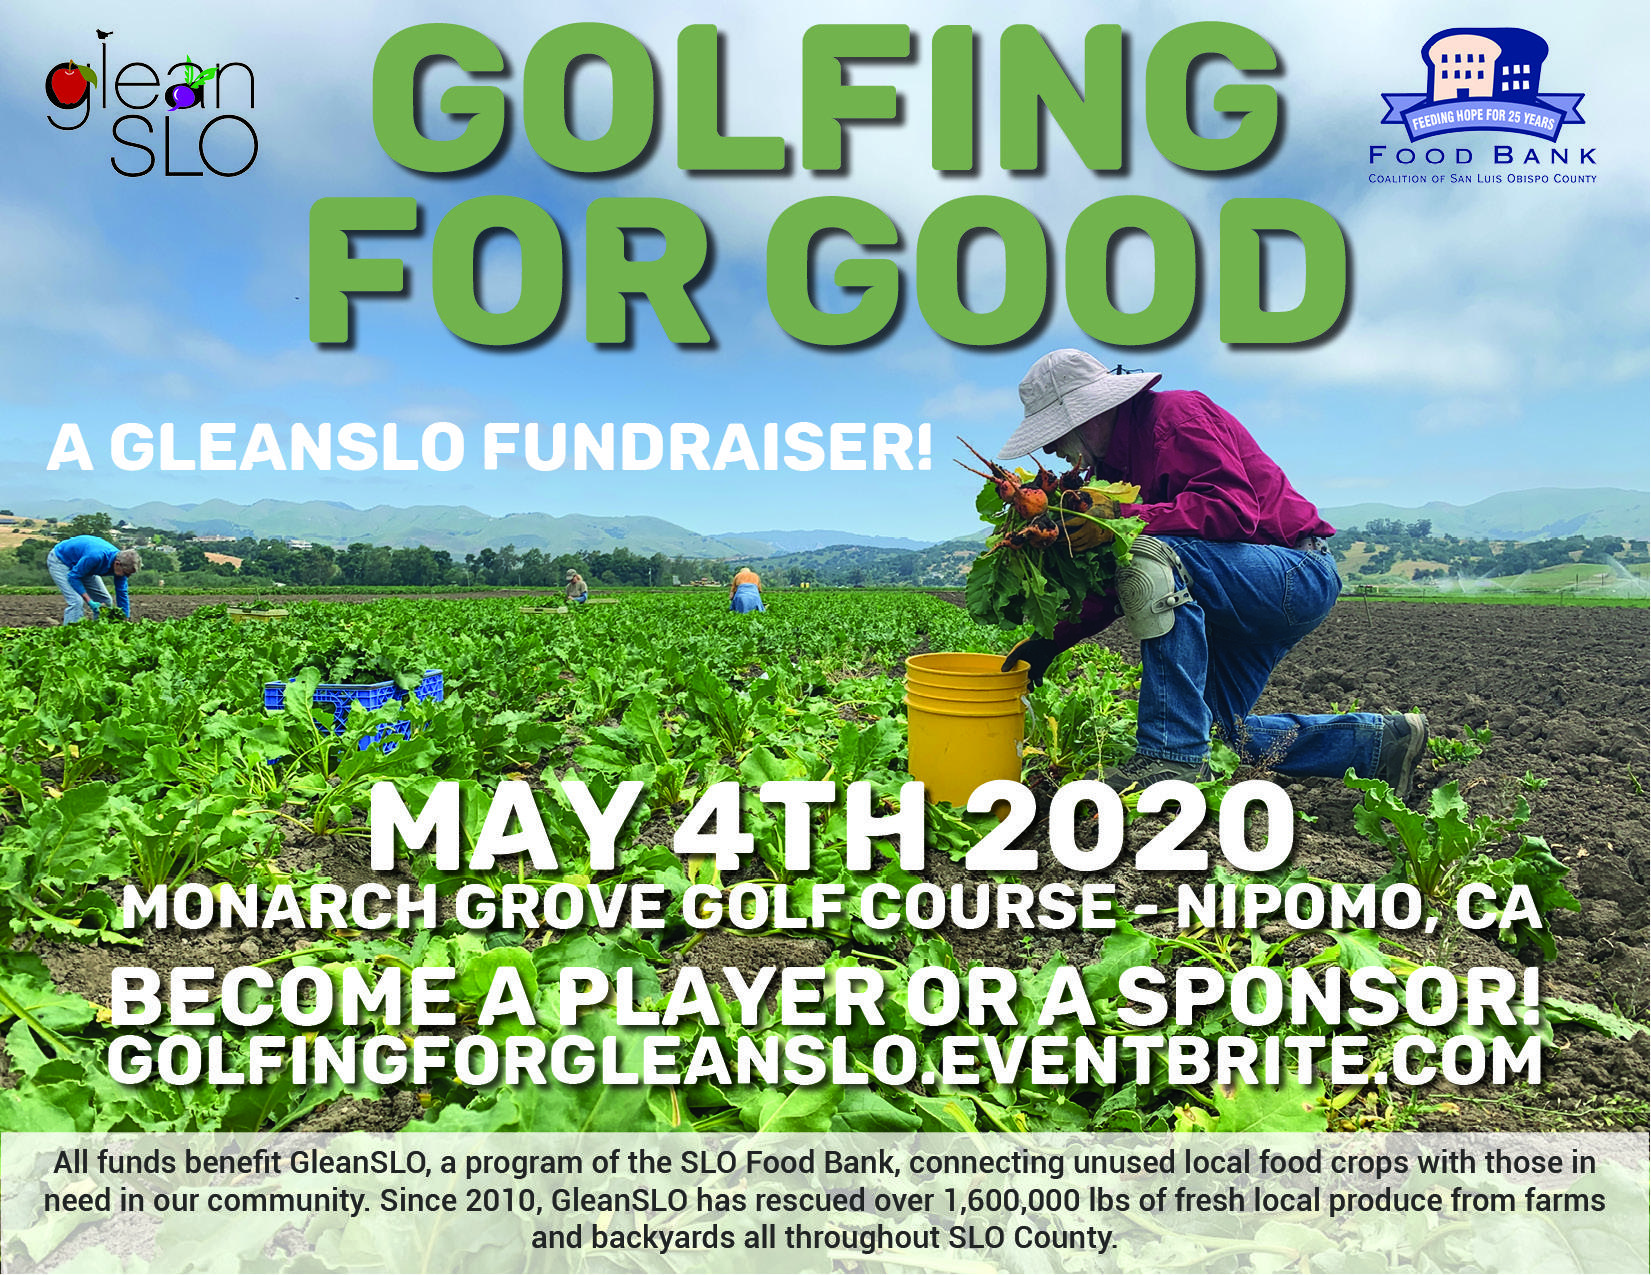 Golfing for Good, a GleanSLO Fundraiser